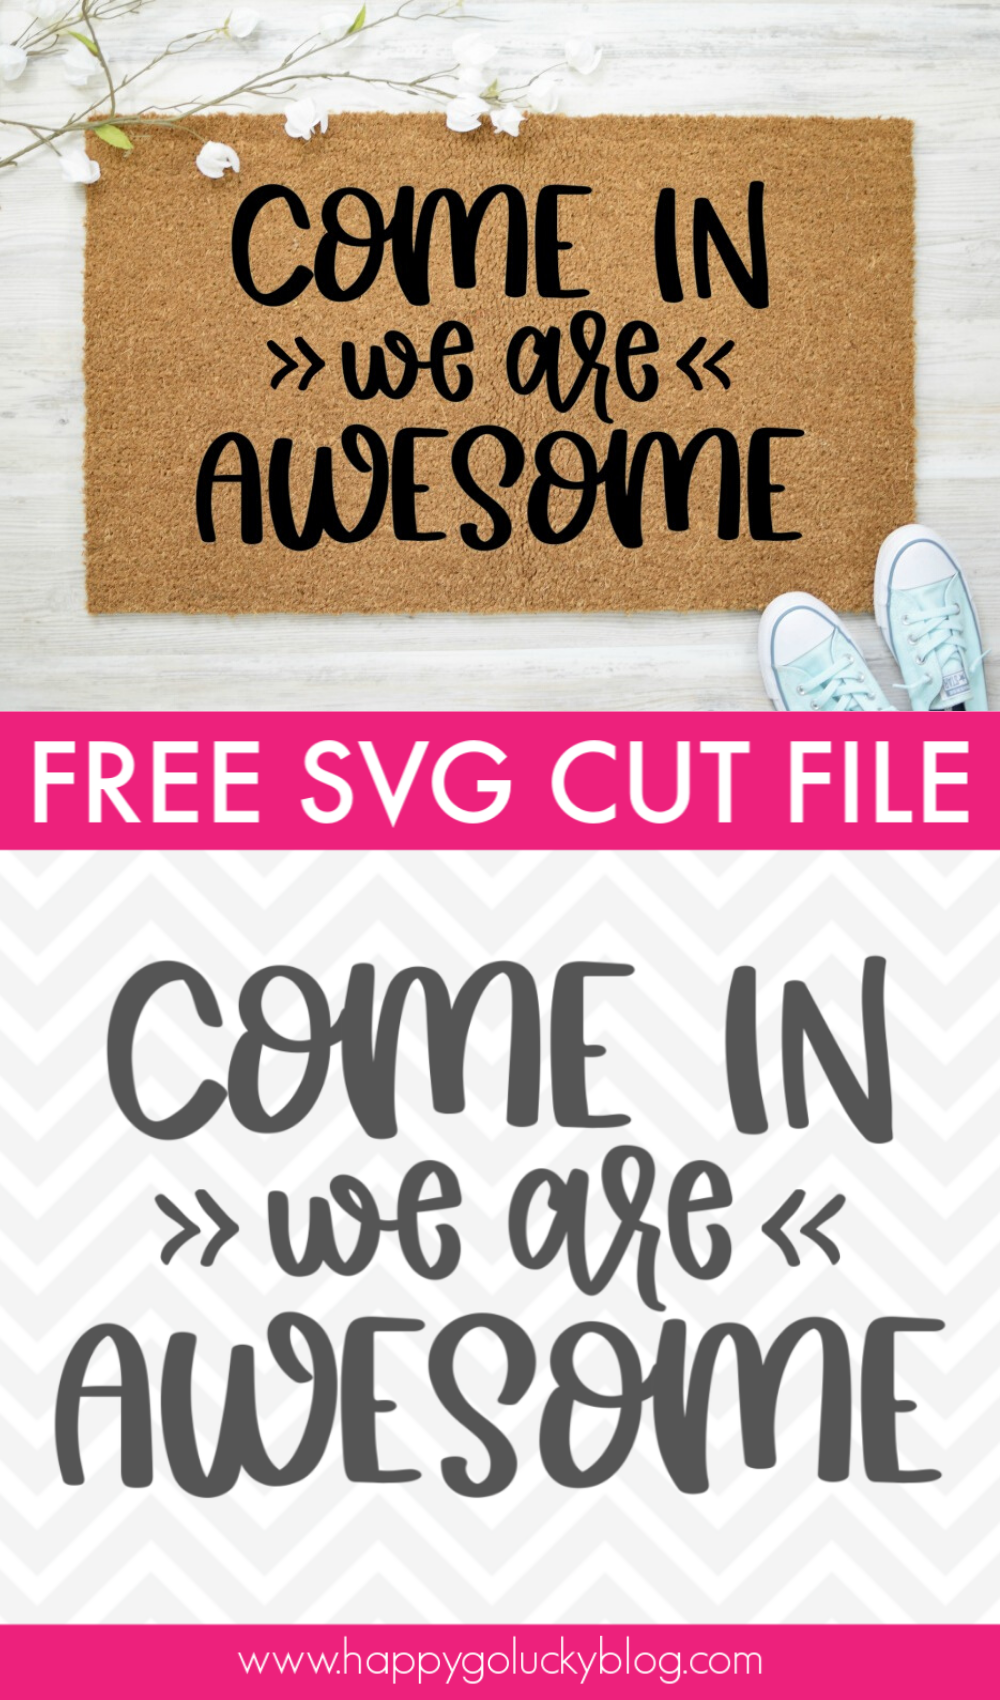 Doormat SVG by Happy Go Lucky Blog